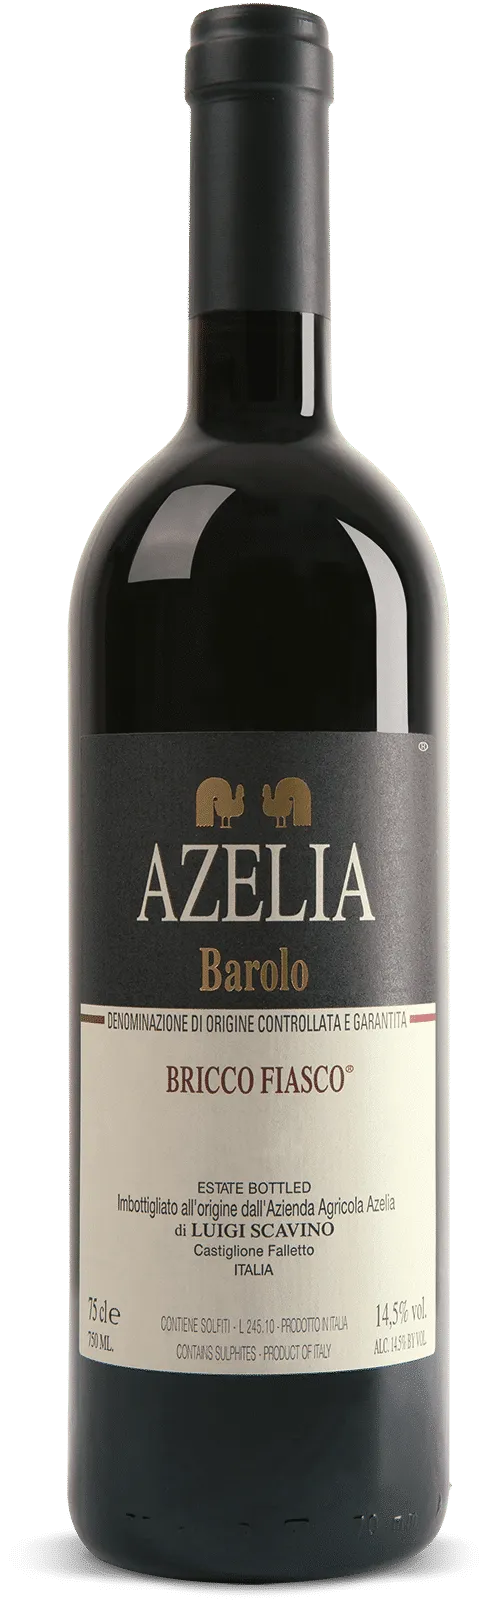 2013 Azelia Barolo Bricco Fiasco (750ml)